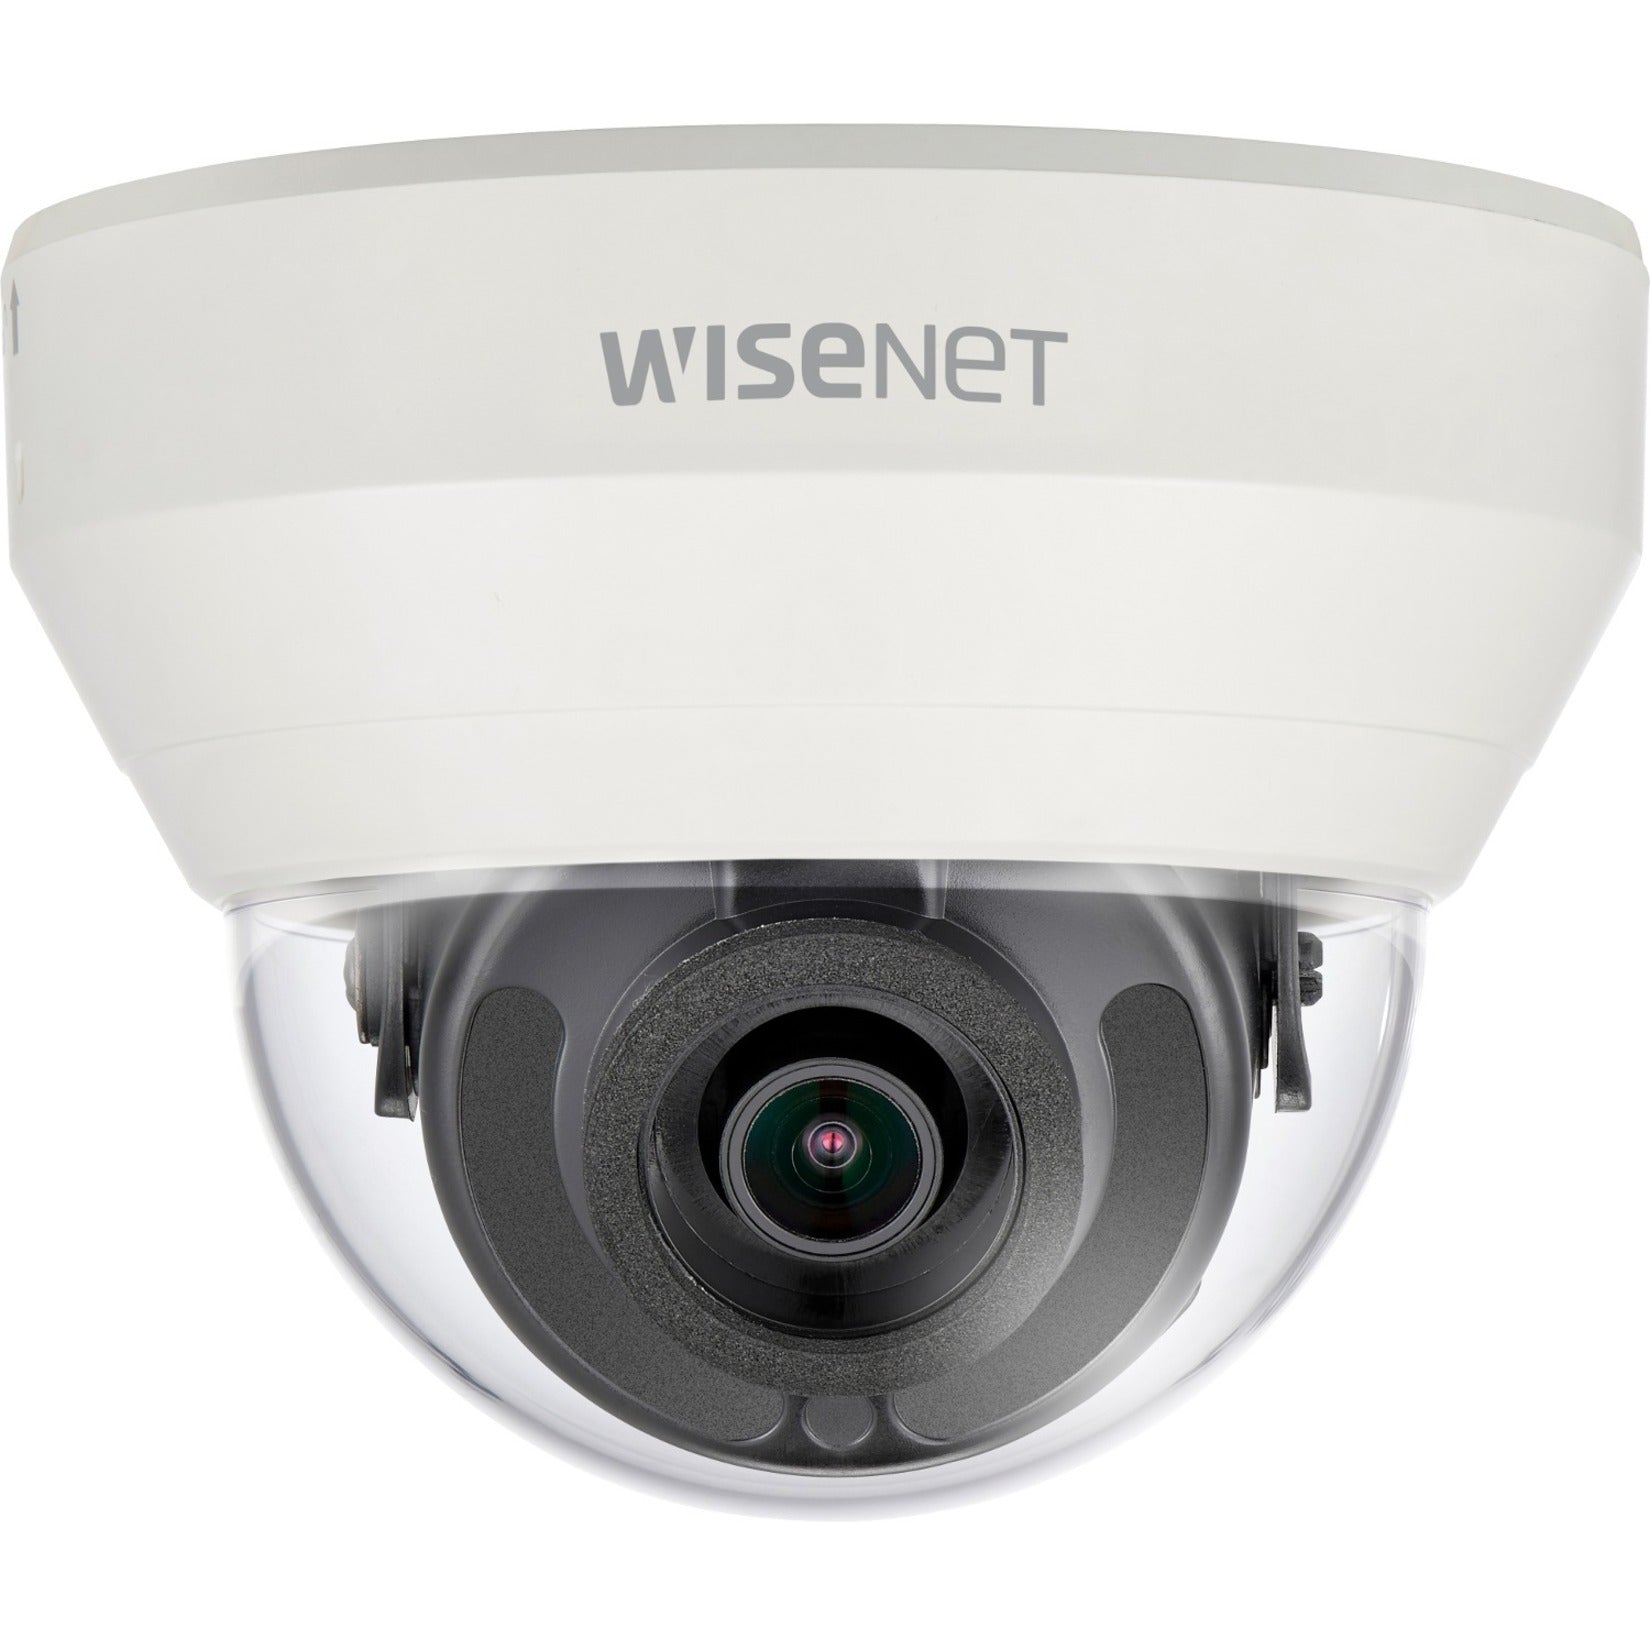 Wisenet HCD-6010 2MP Analog Dome Camera, HD+ Indoor Surveillance Camera